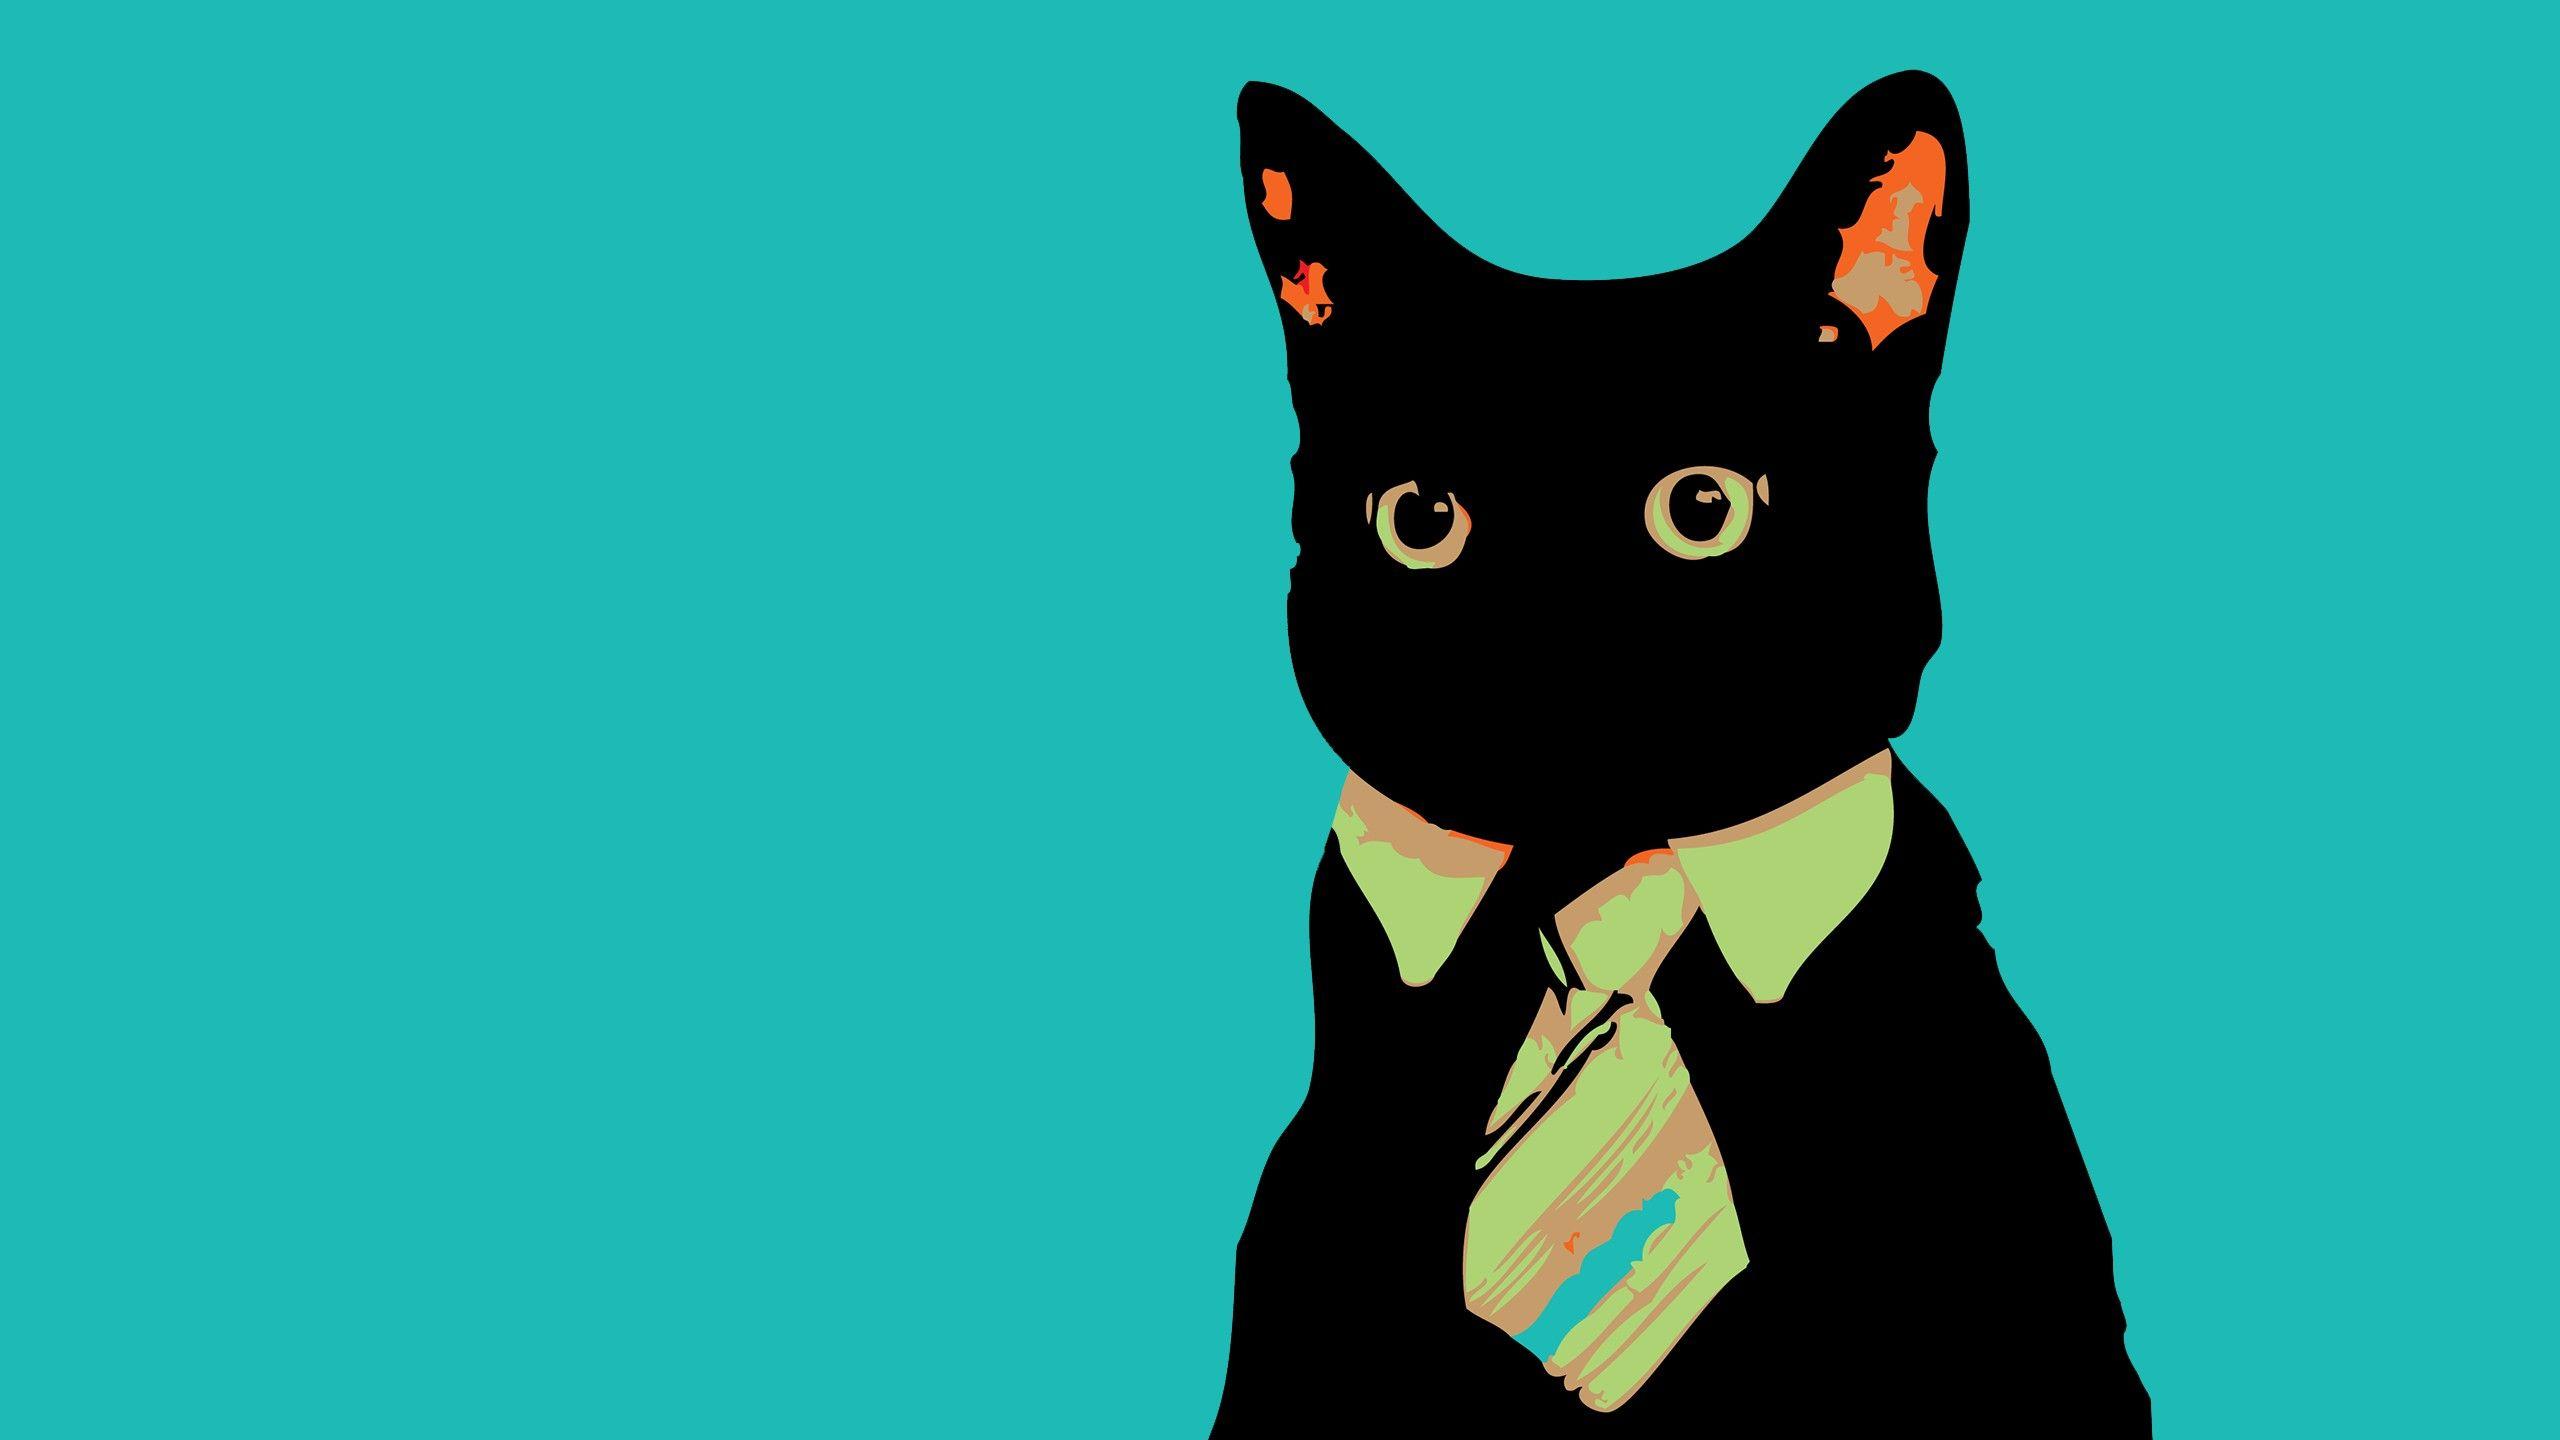 Cats animals vector tie meme business business cat wallpapers